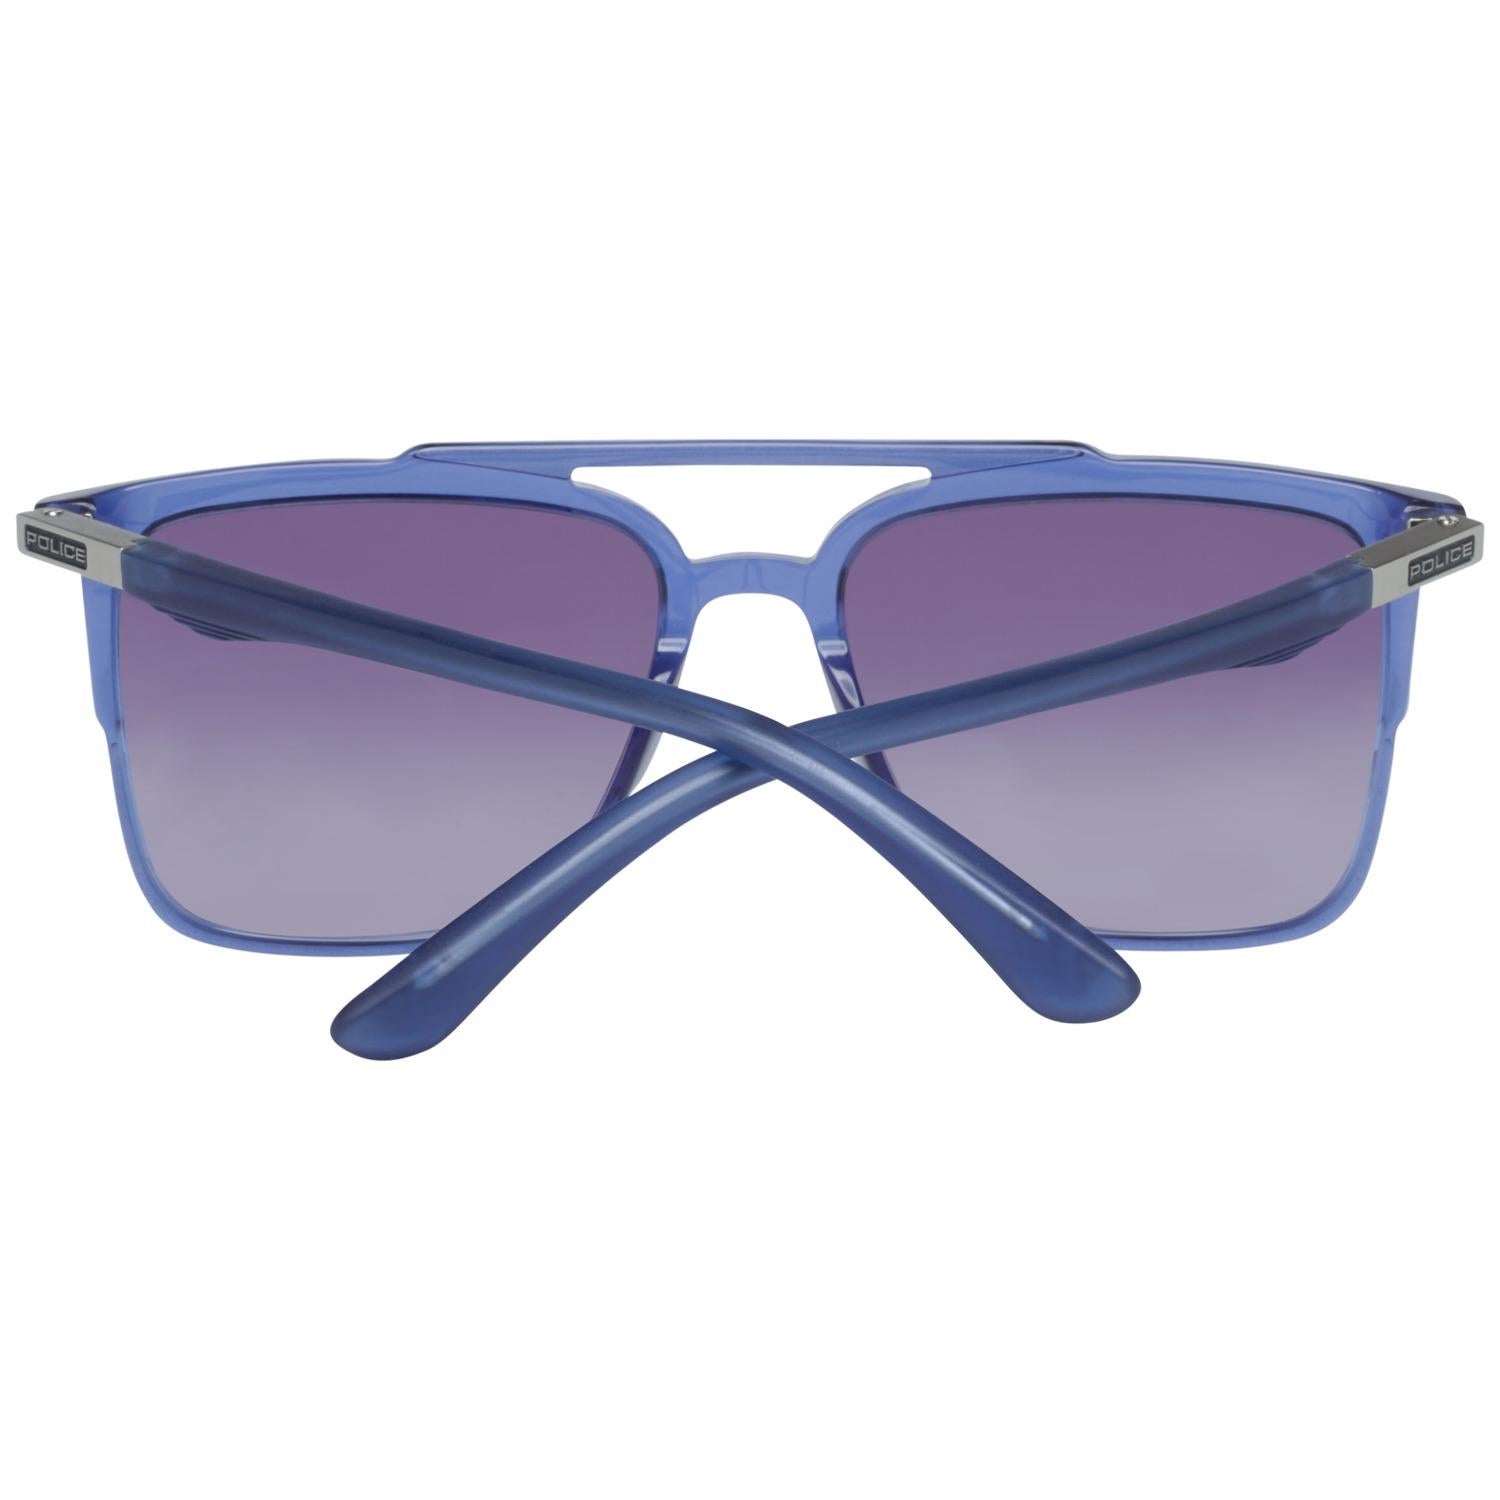 Gray Police Mint Unisex Blue Sunglasses SPL363 560955 56-18-145 mm